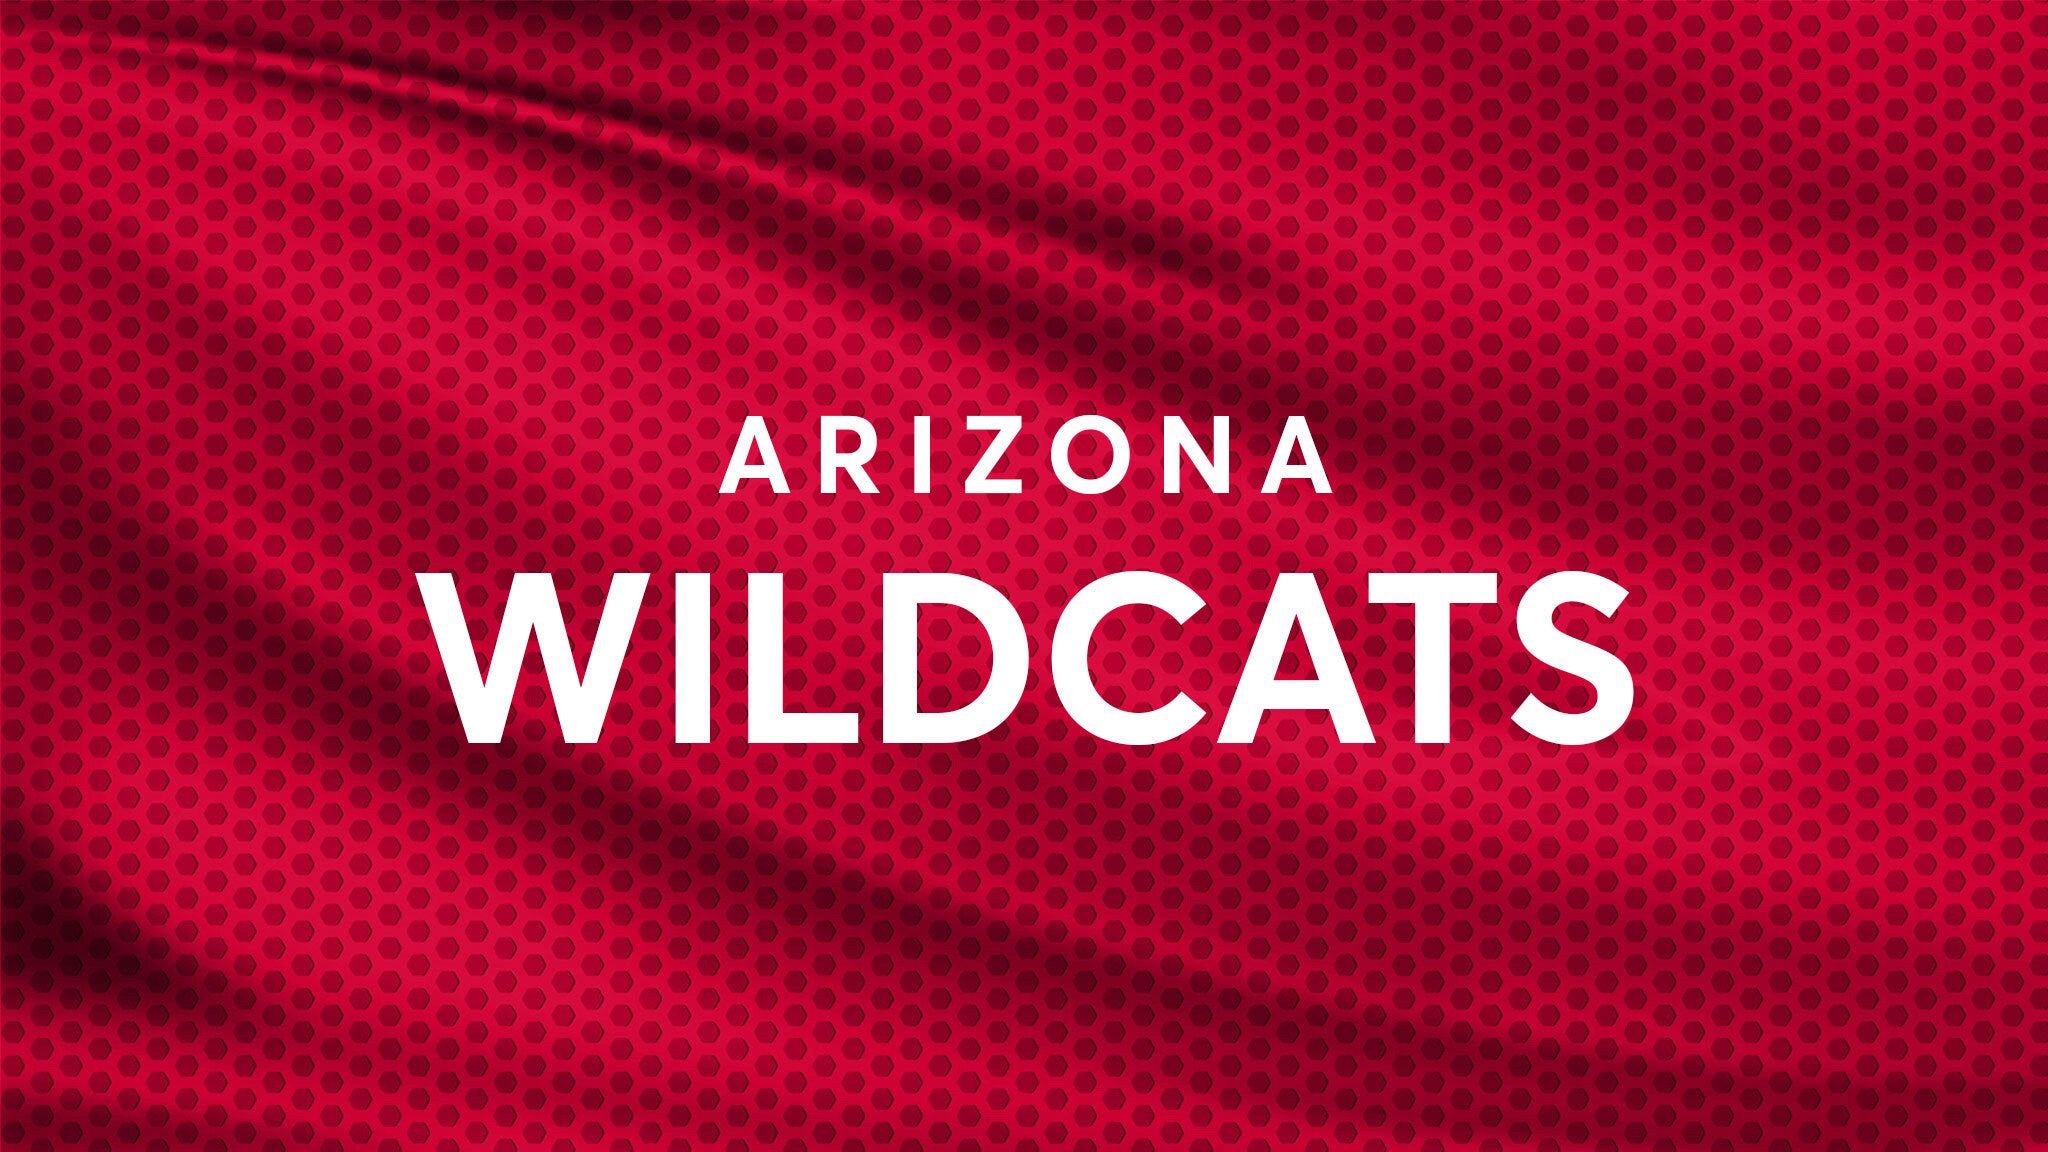 Arizona Wildcats Football vs. Texas Tech Red Raiders Football hero